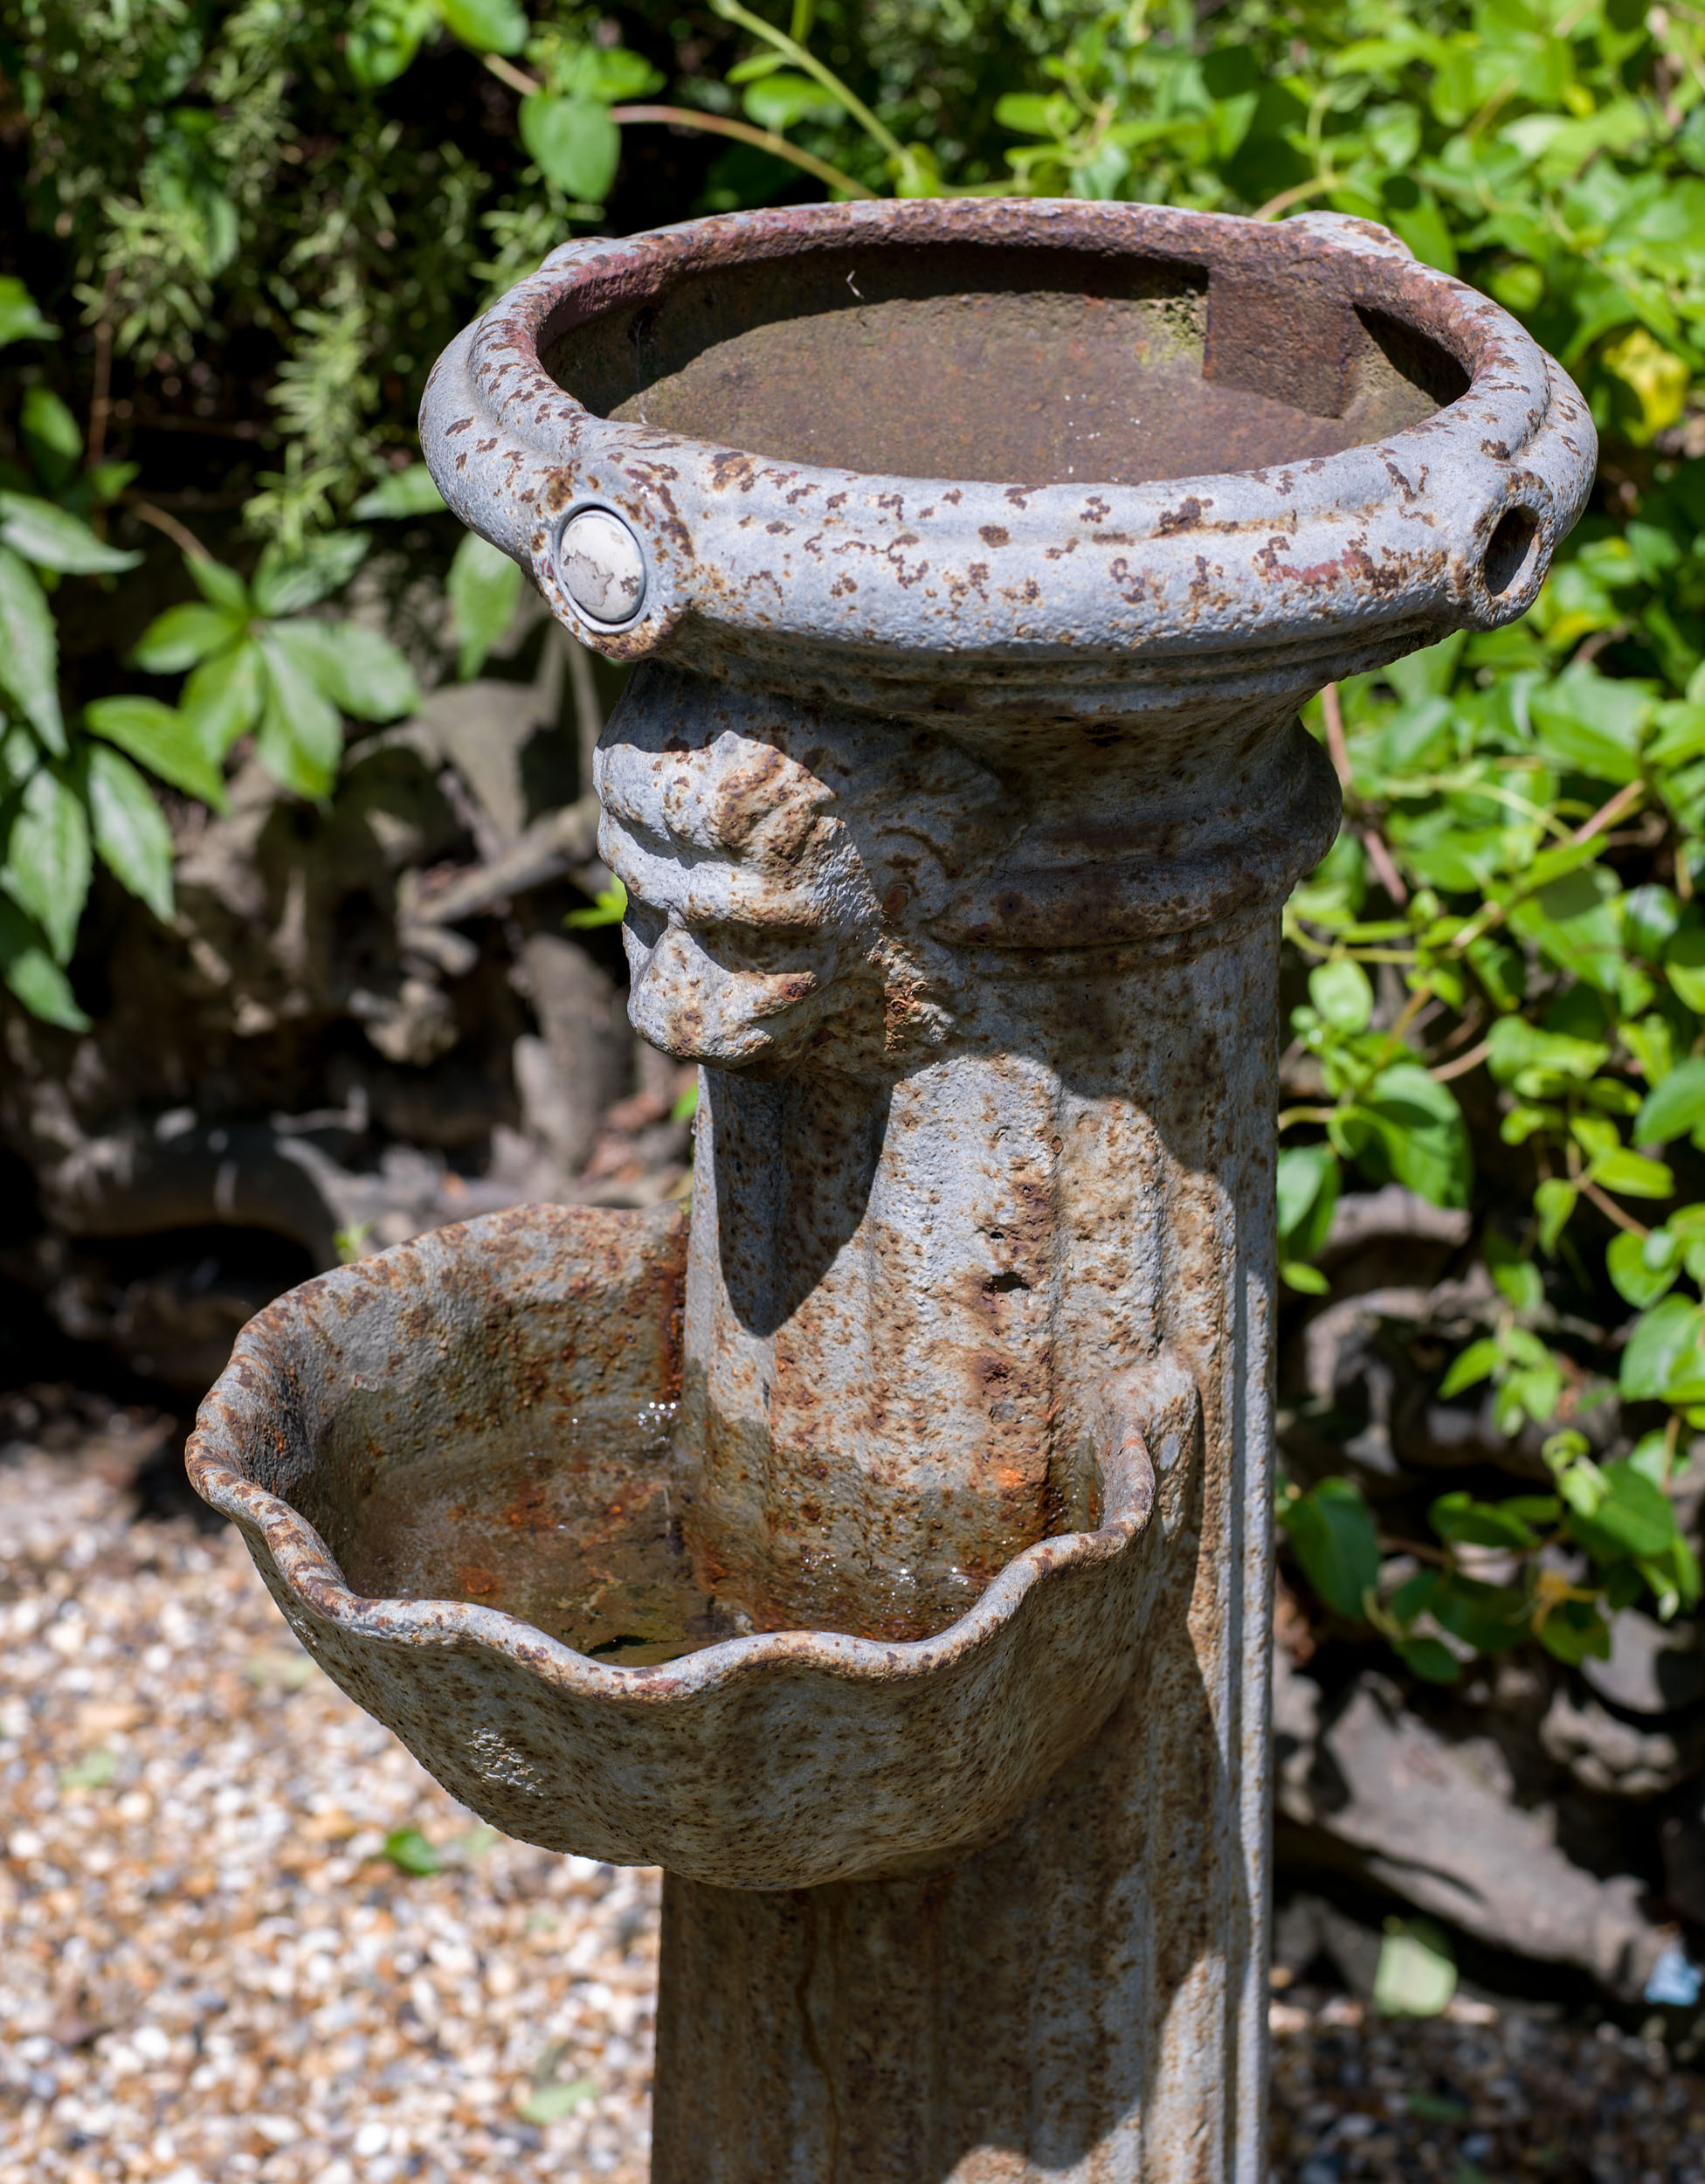 A Small Cast Iron Public Drinking Fountain